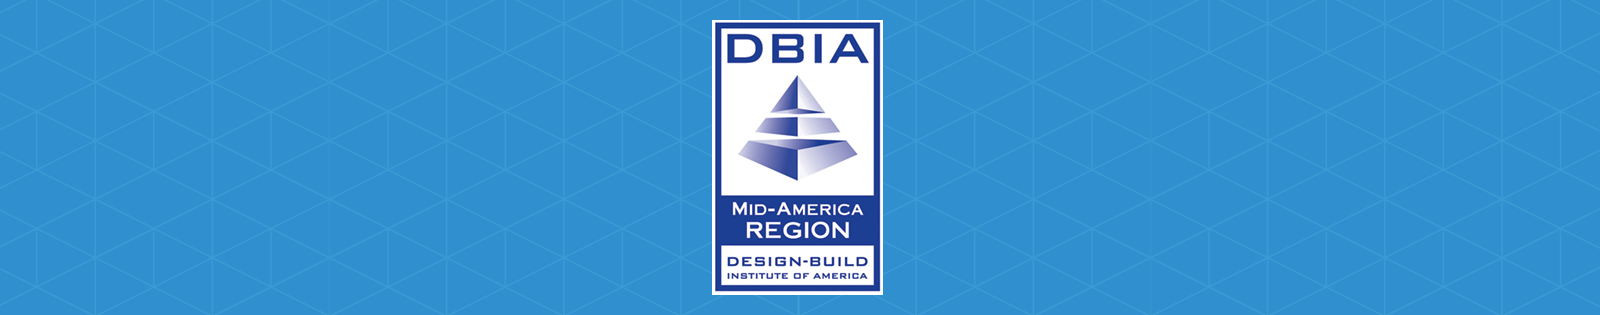 DBIA header with logo